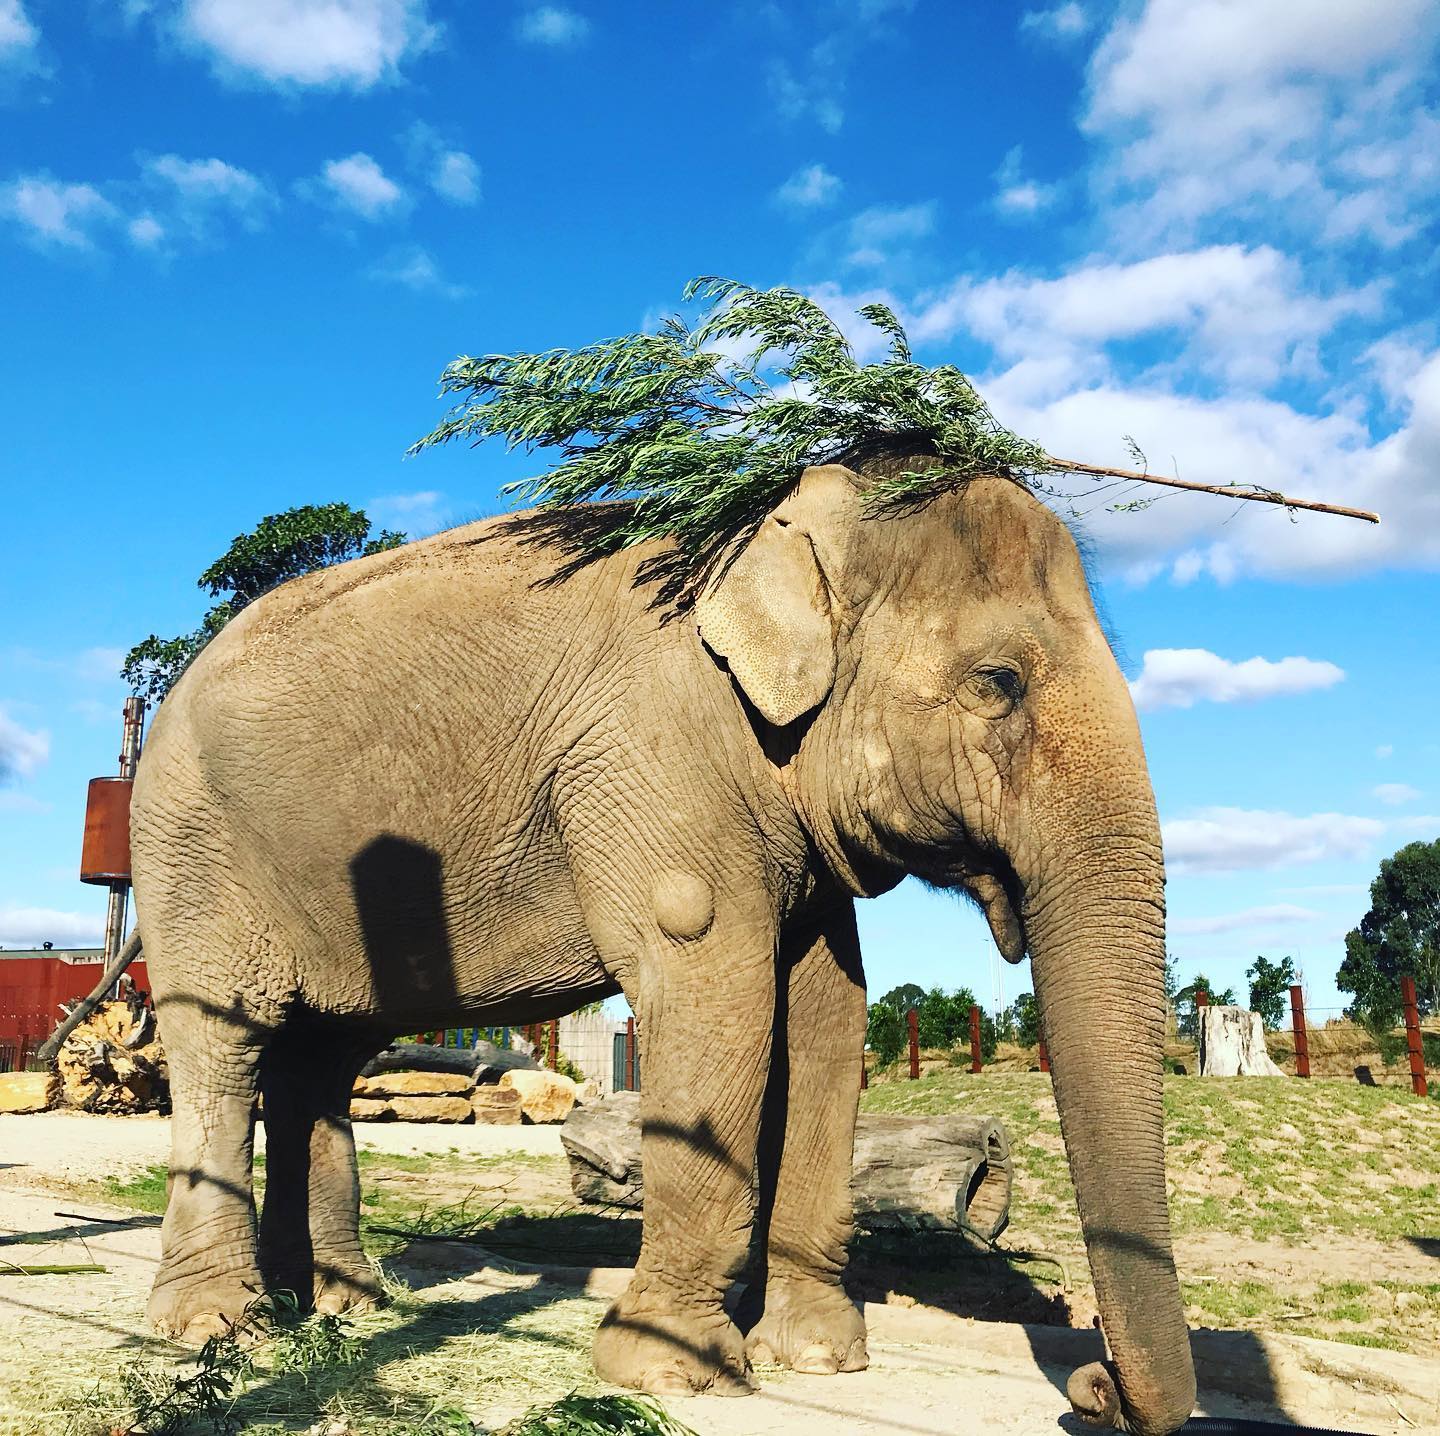 An elephant wearing cut weeds on its head.